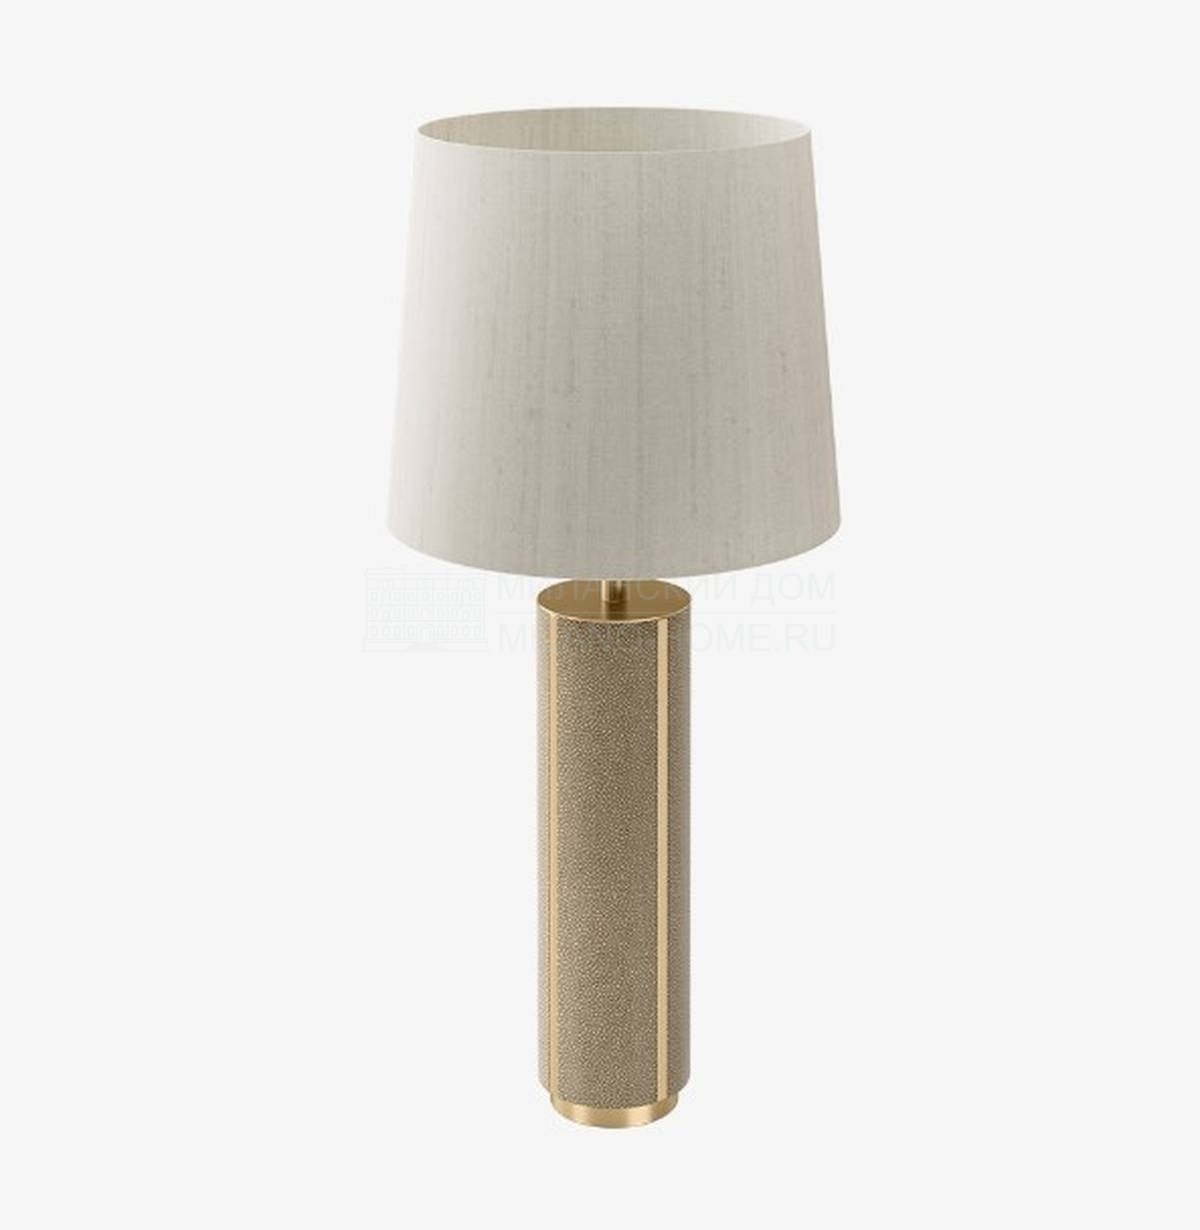 Настольная лампа Clos table lamp из Португалии фабрики FRATO